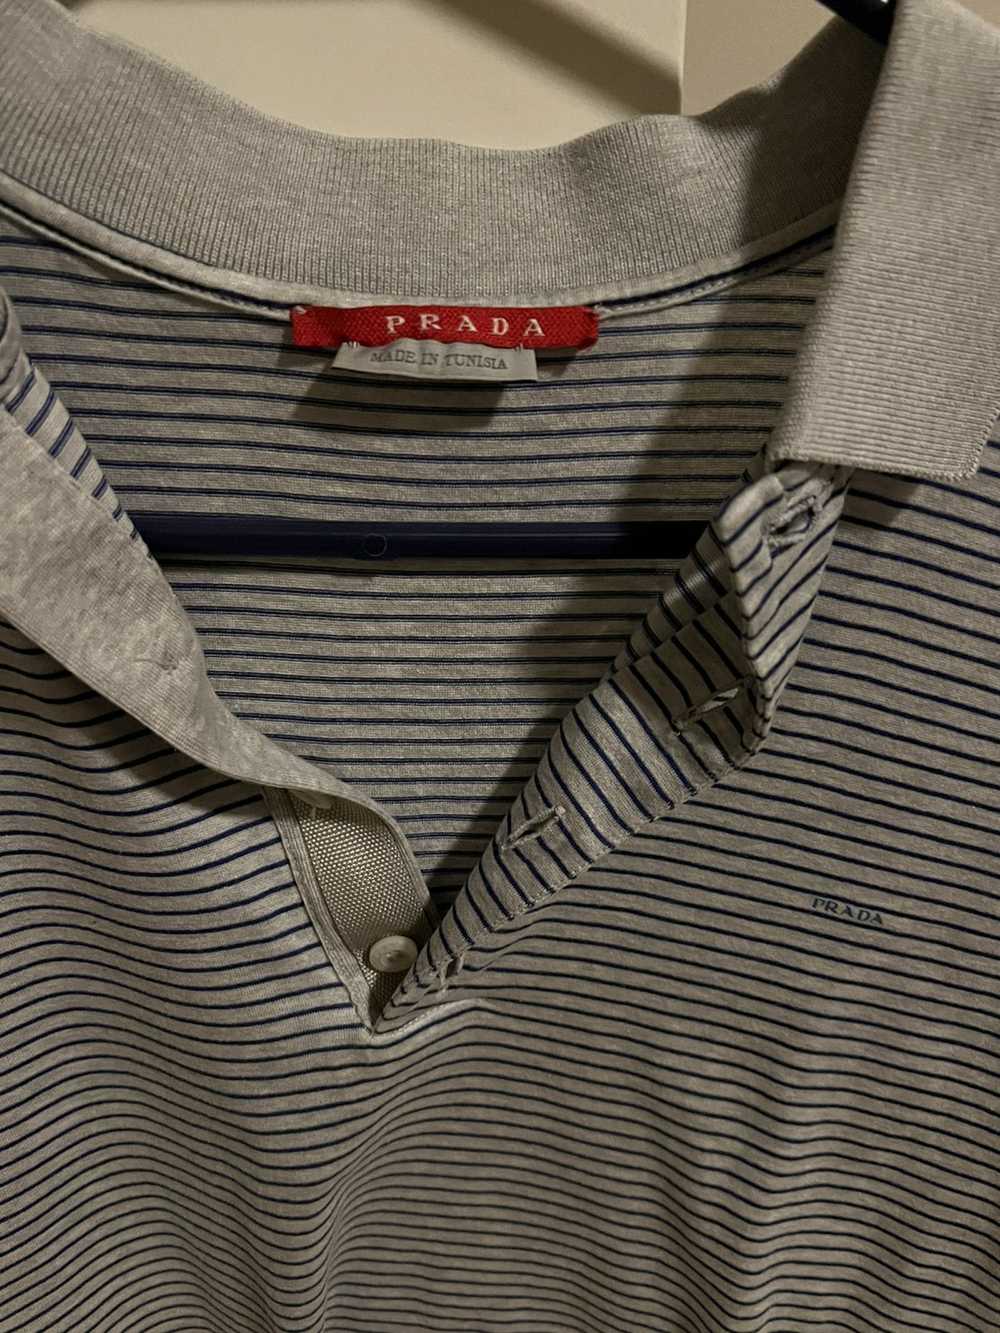 Prada Polo Collared T-Shirt (shrunk) - image 2